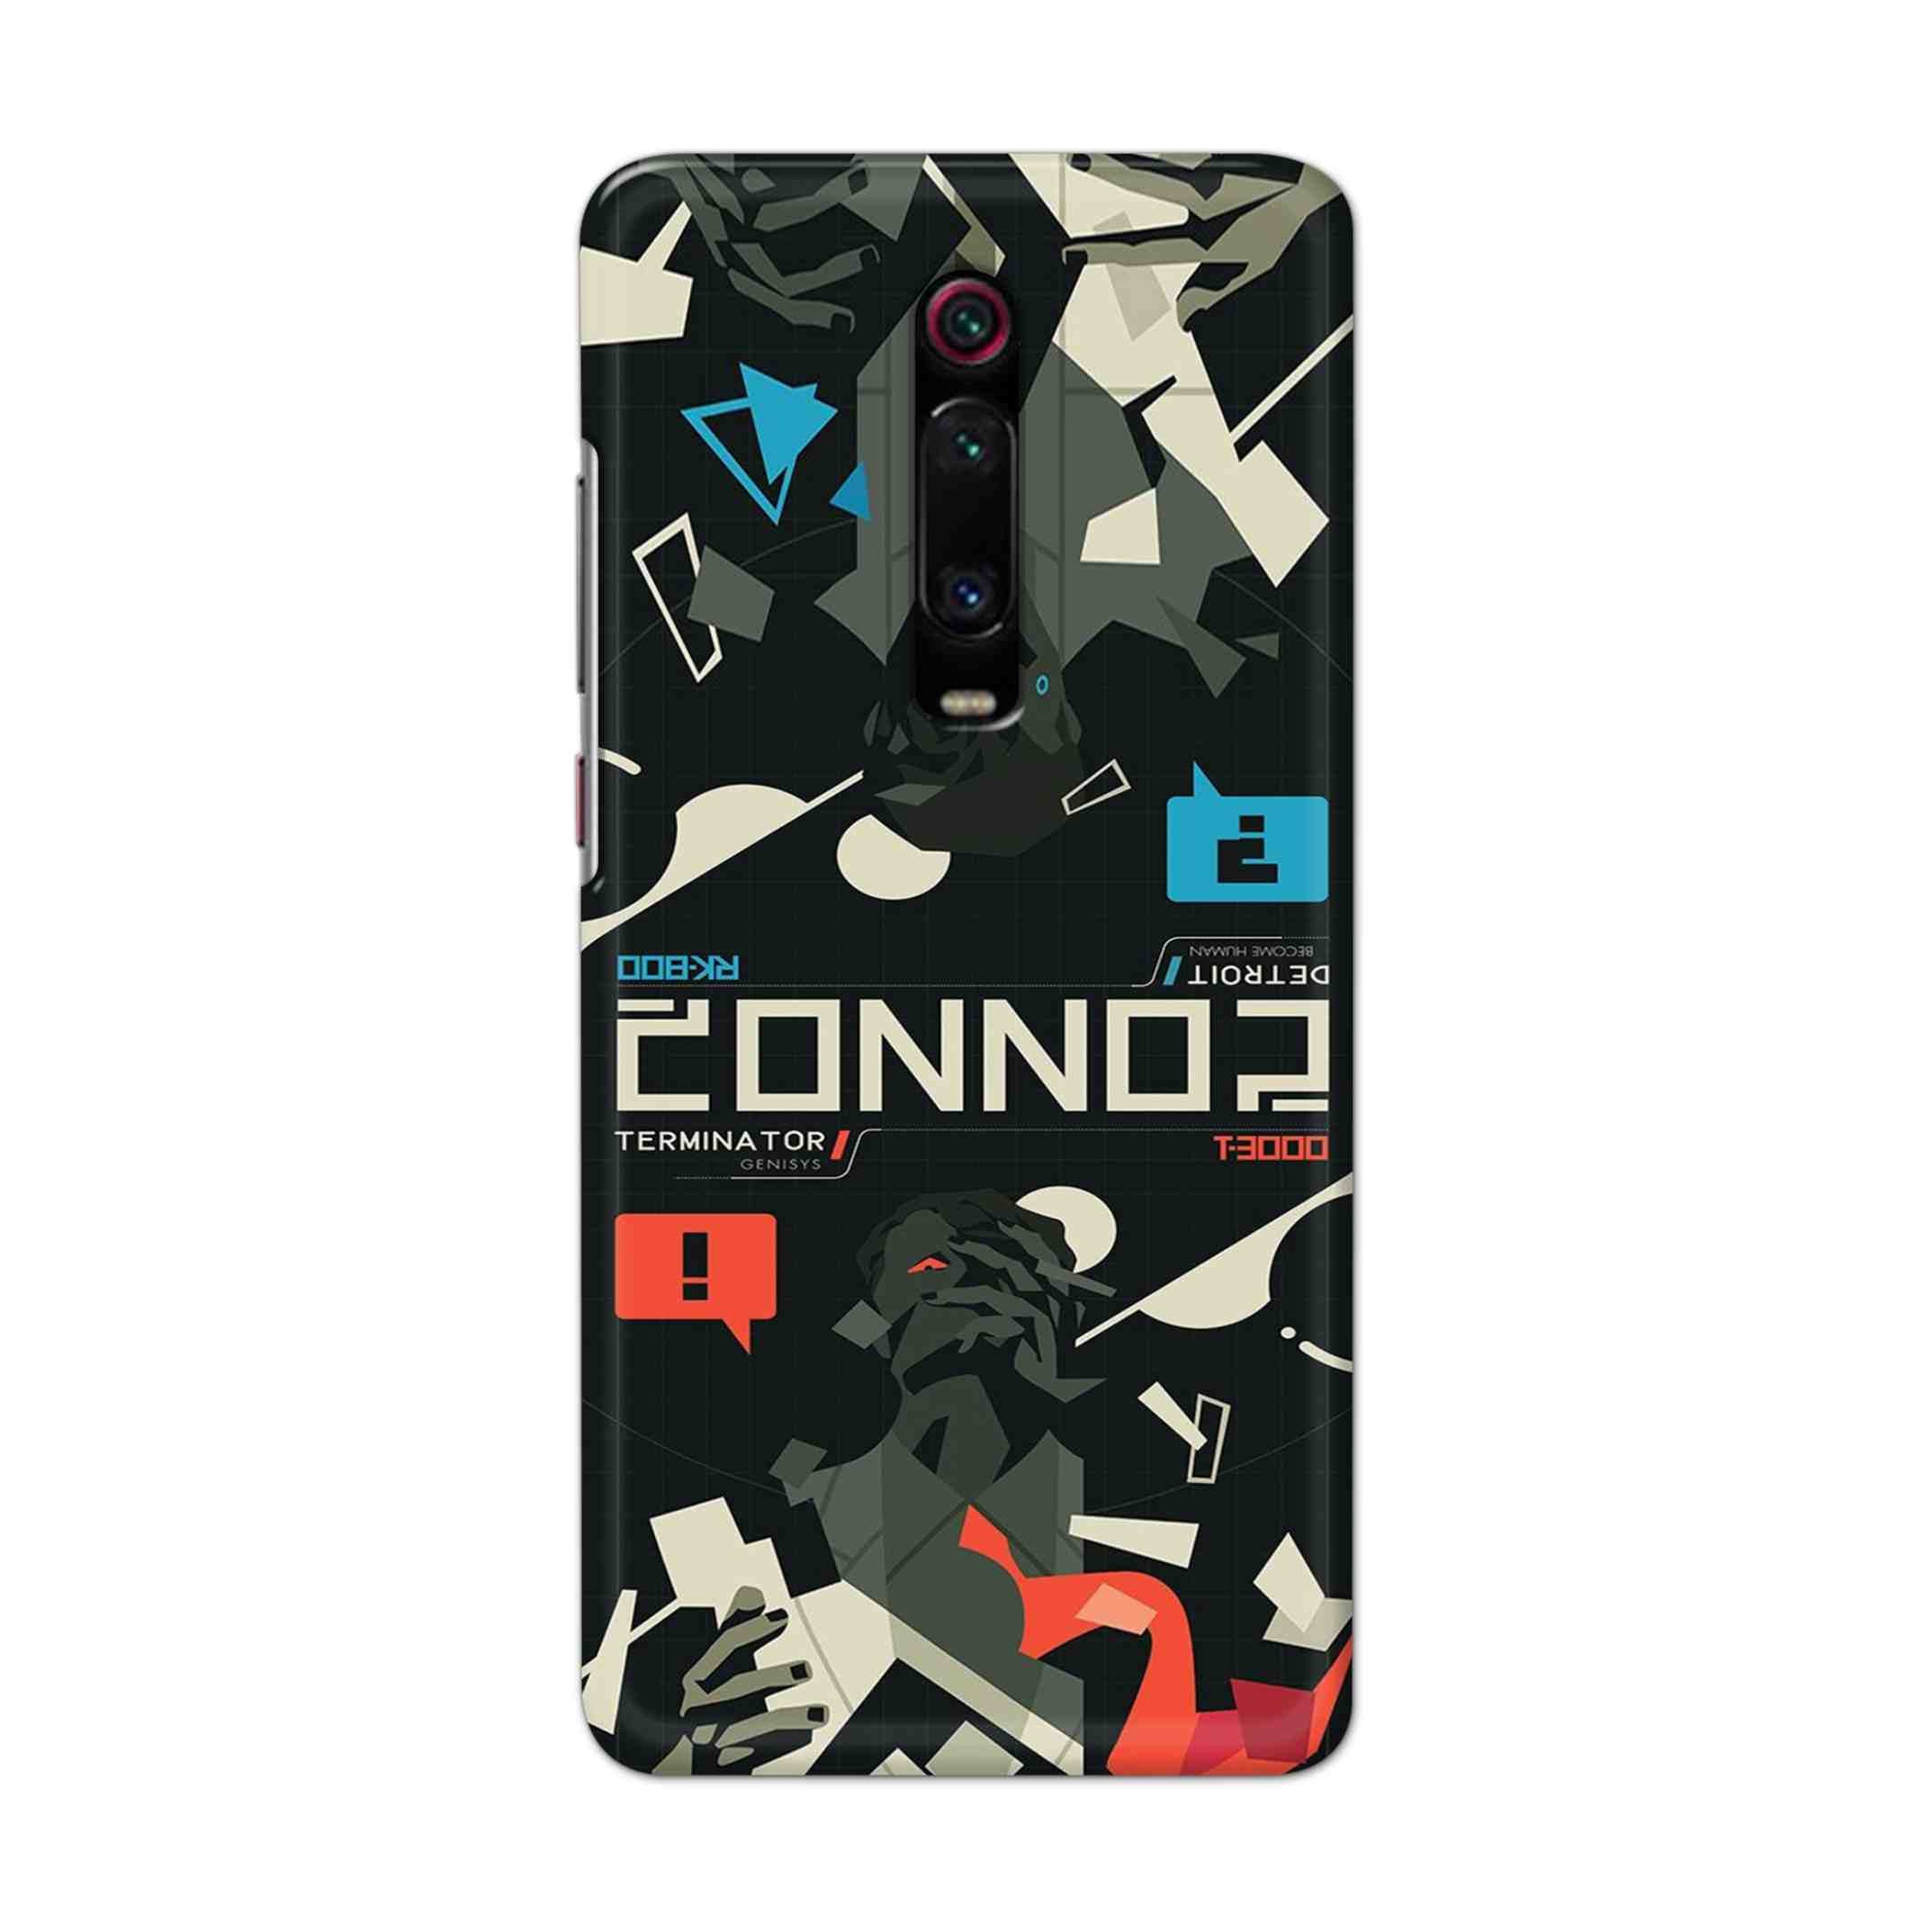 Buy Terminator Hard Back Mobile Phone Case Cover For Xiaomi Redmi K20 Online